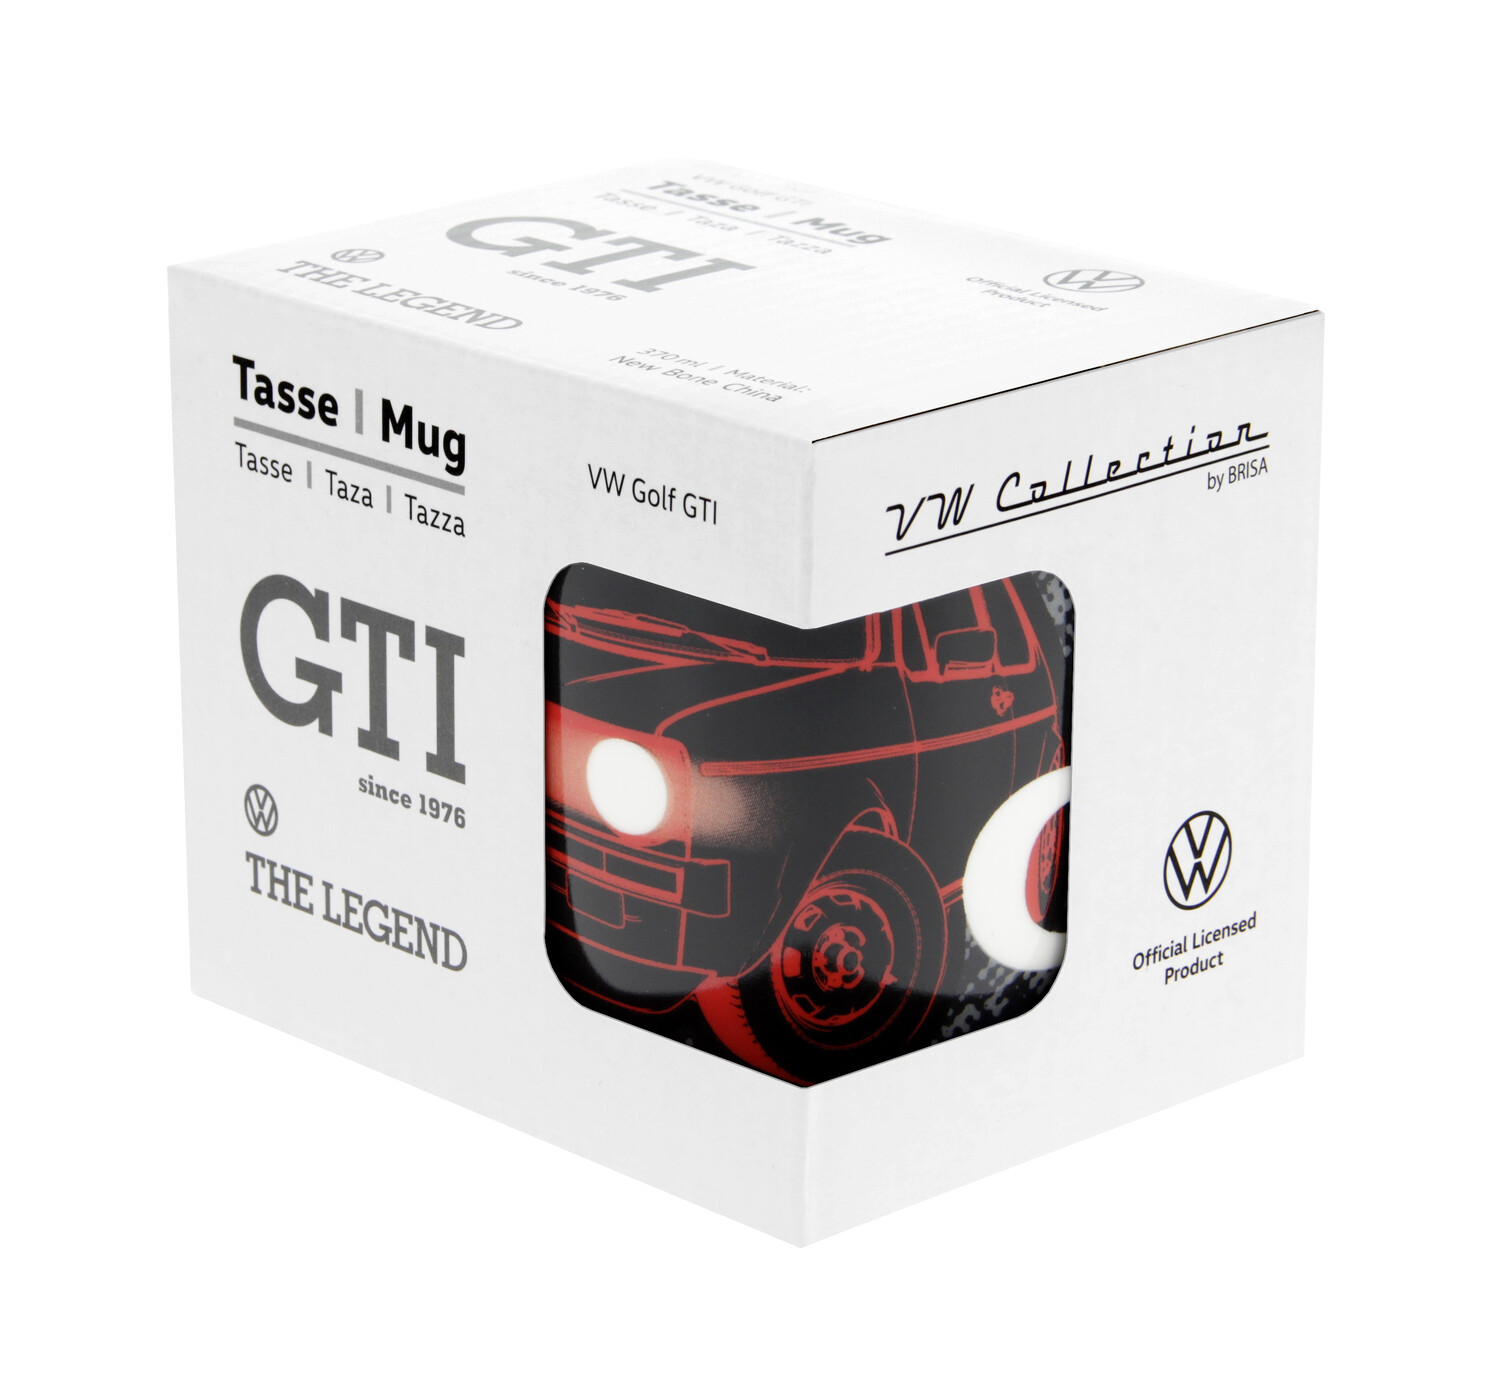 VW GTI coffee cup 370ml
